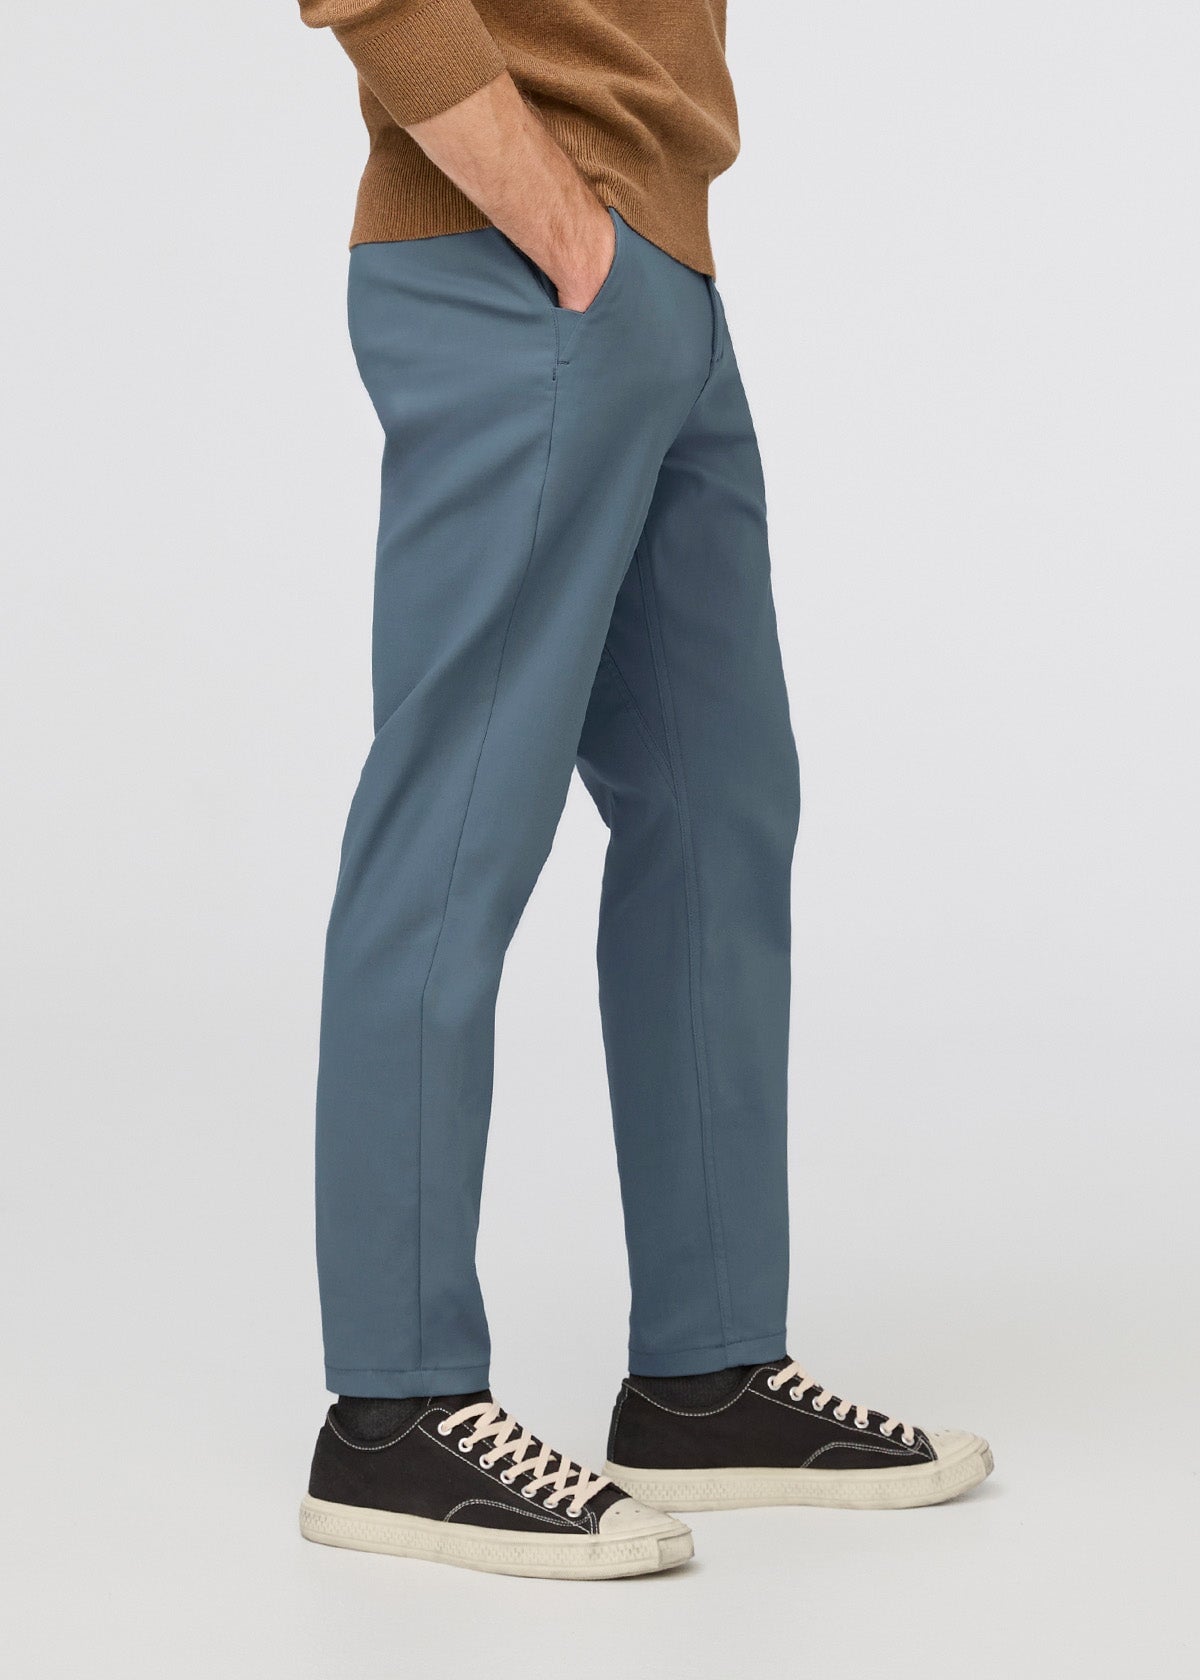 NuStretch Flex Trouser - Steel Blue